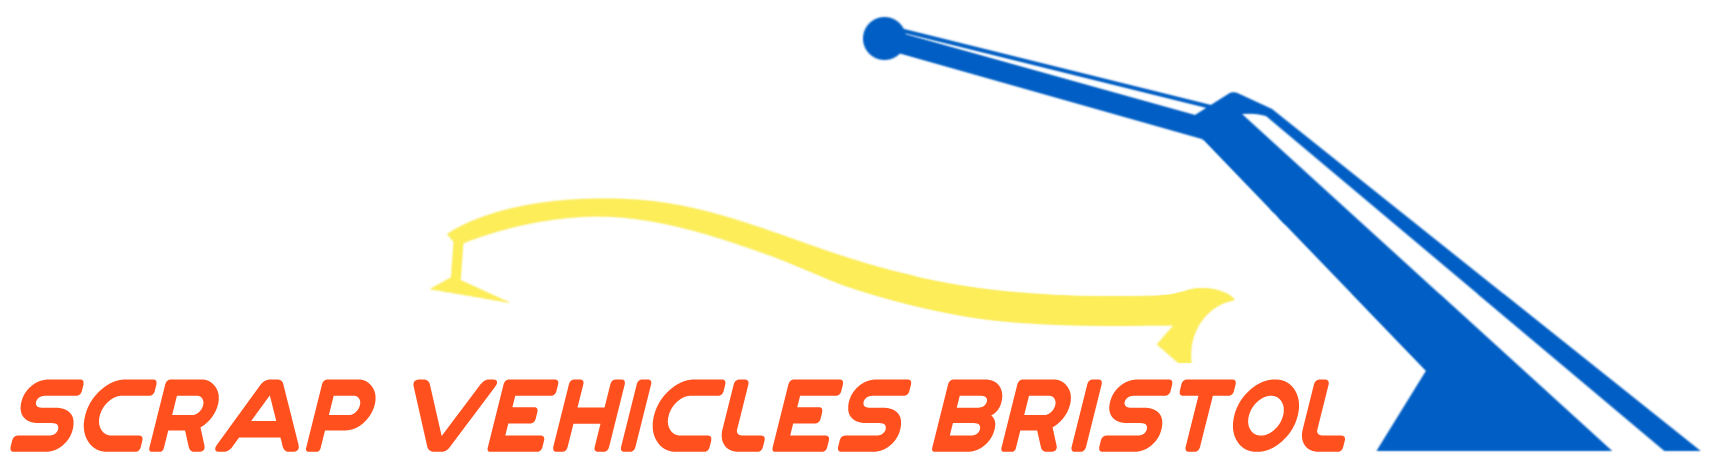 Scrap Vehicles Bristol logo